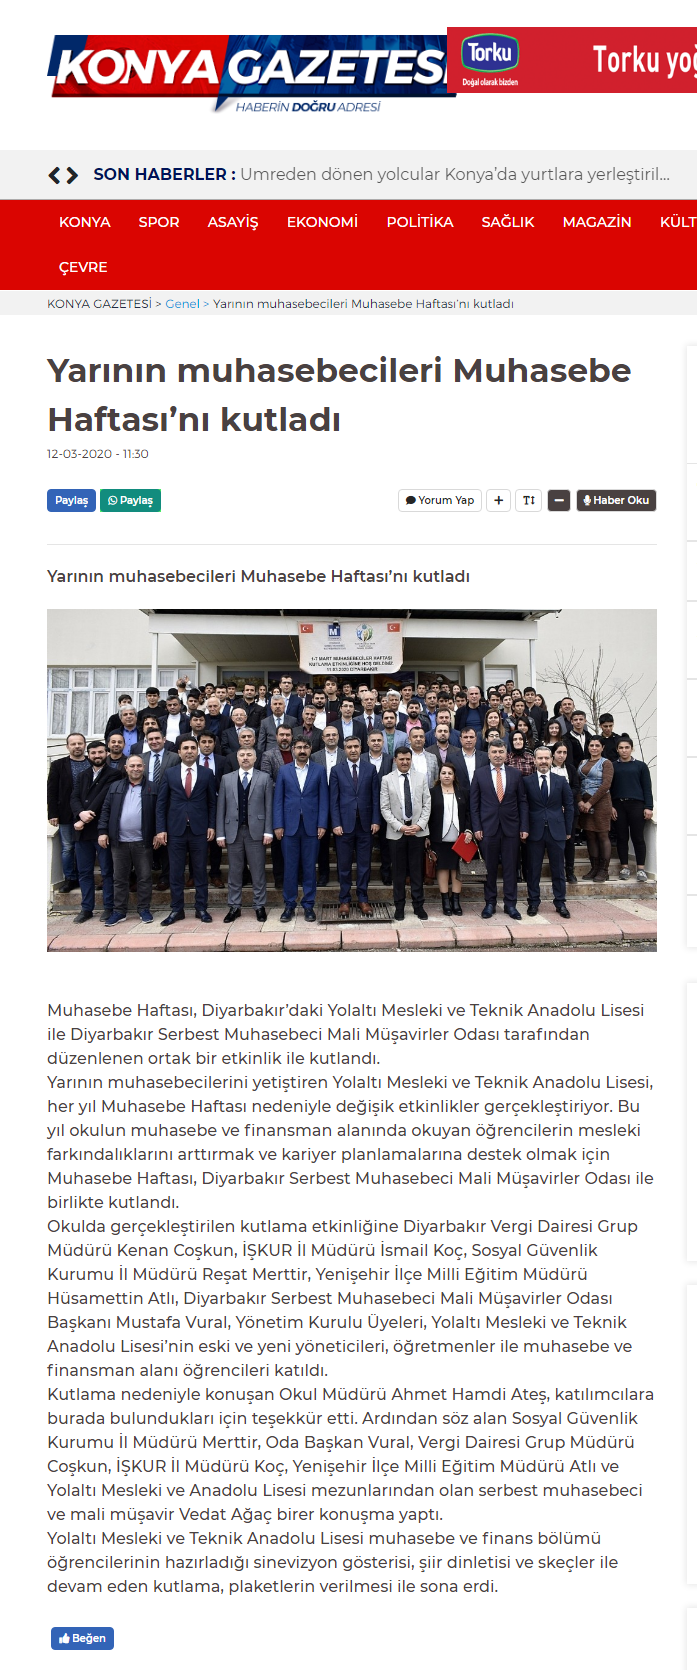 YARININ MUHASEBECİLERİ MUHASEBE HAFTASINI KUTLADI (konyagazetesi.com)